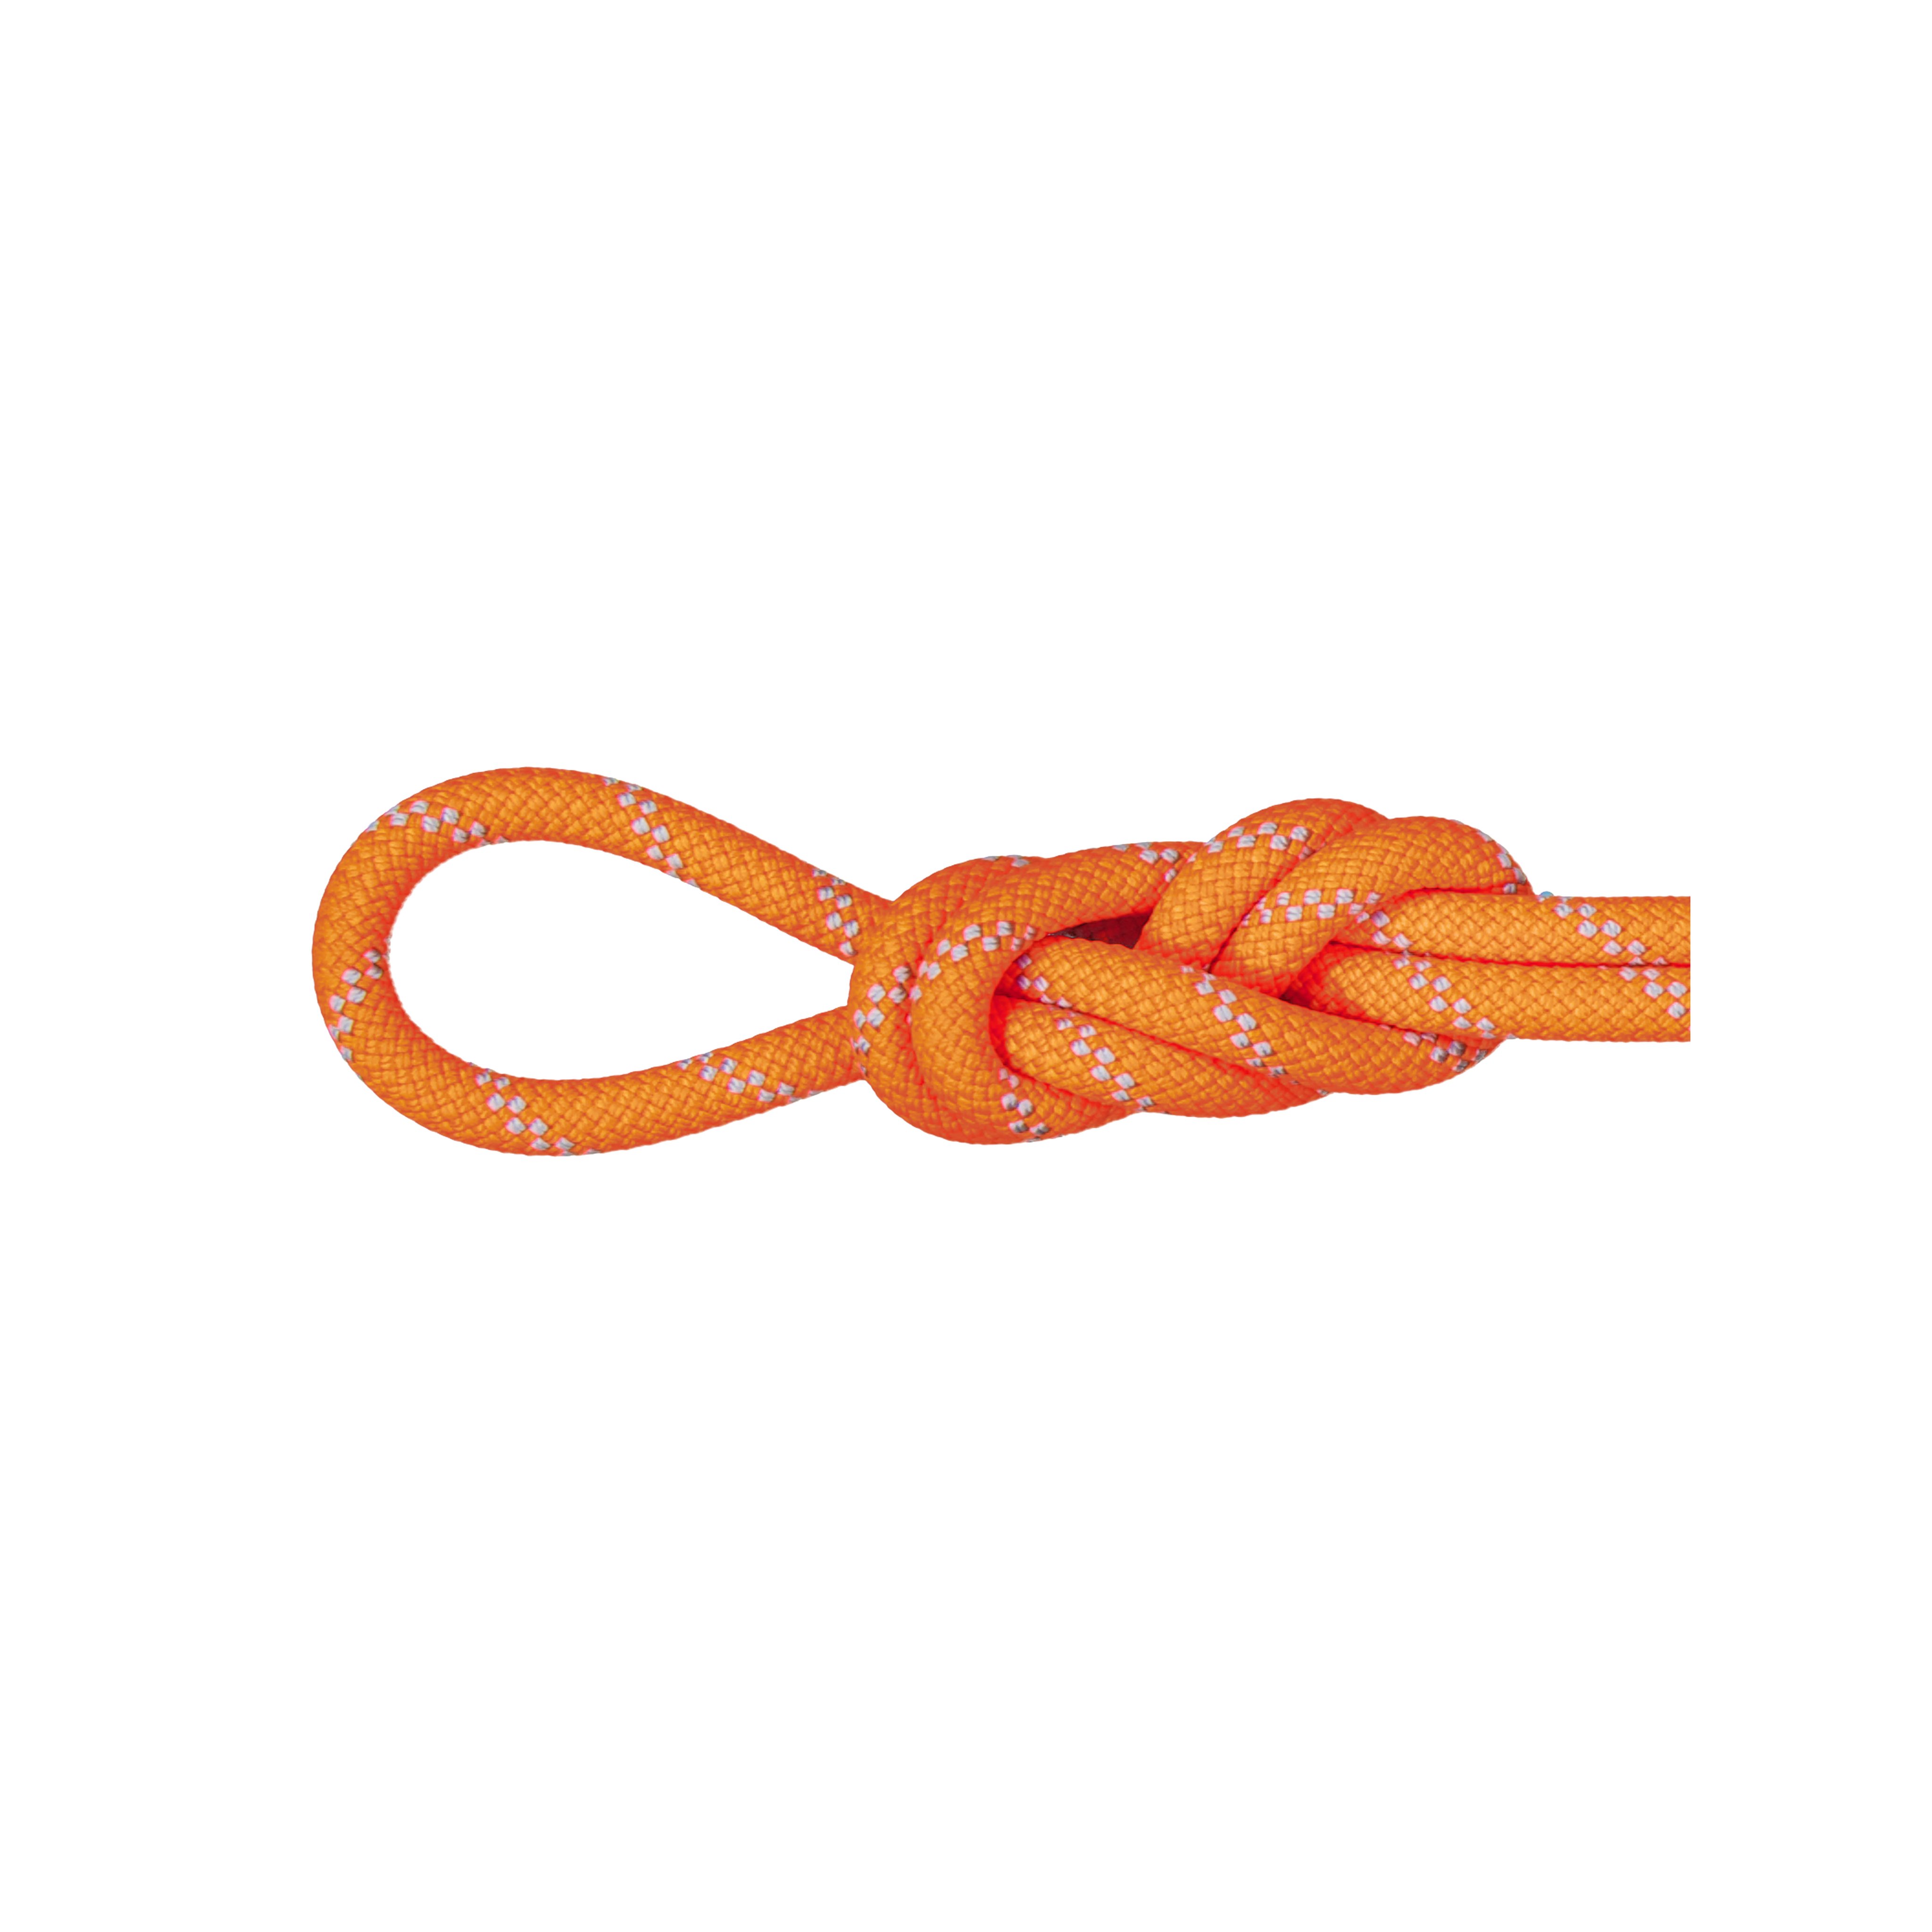 9.5 Alpine Dry Rope product image